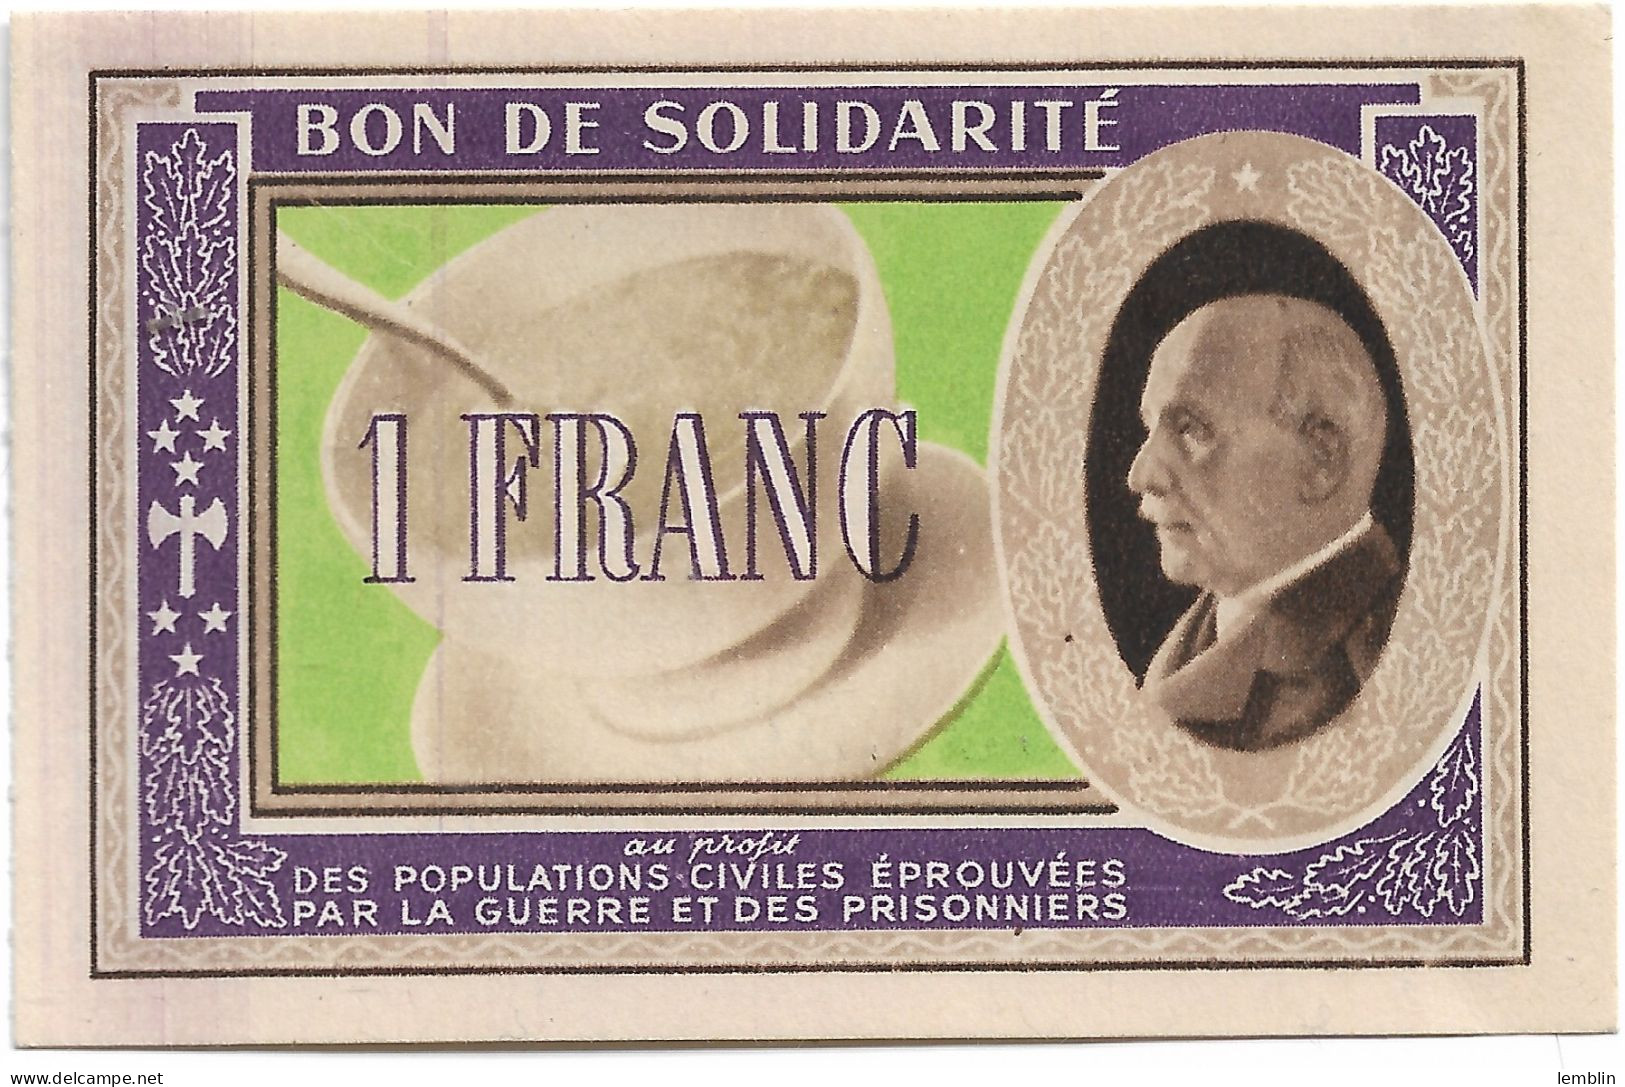 FRANCE - BON DE SOLIDARITE PETAIN D'UN FRANC - Bons & Nécessité